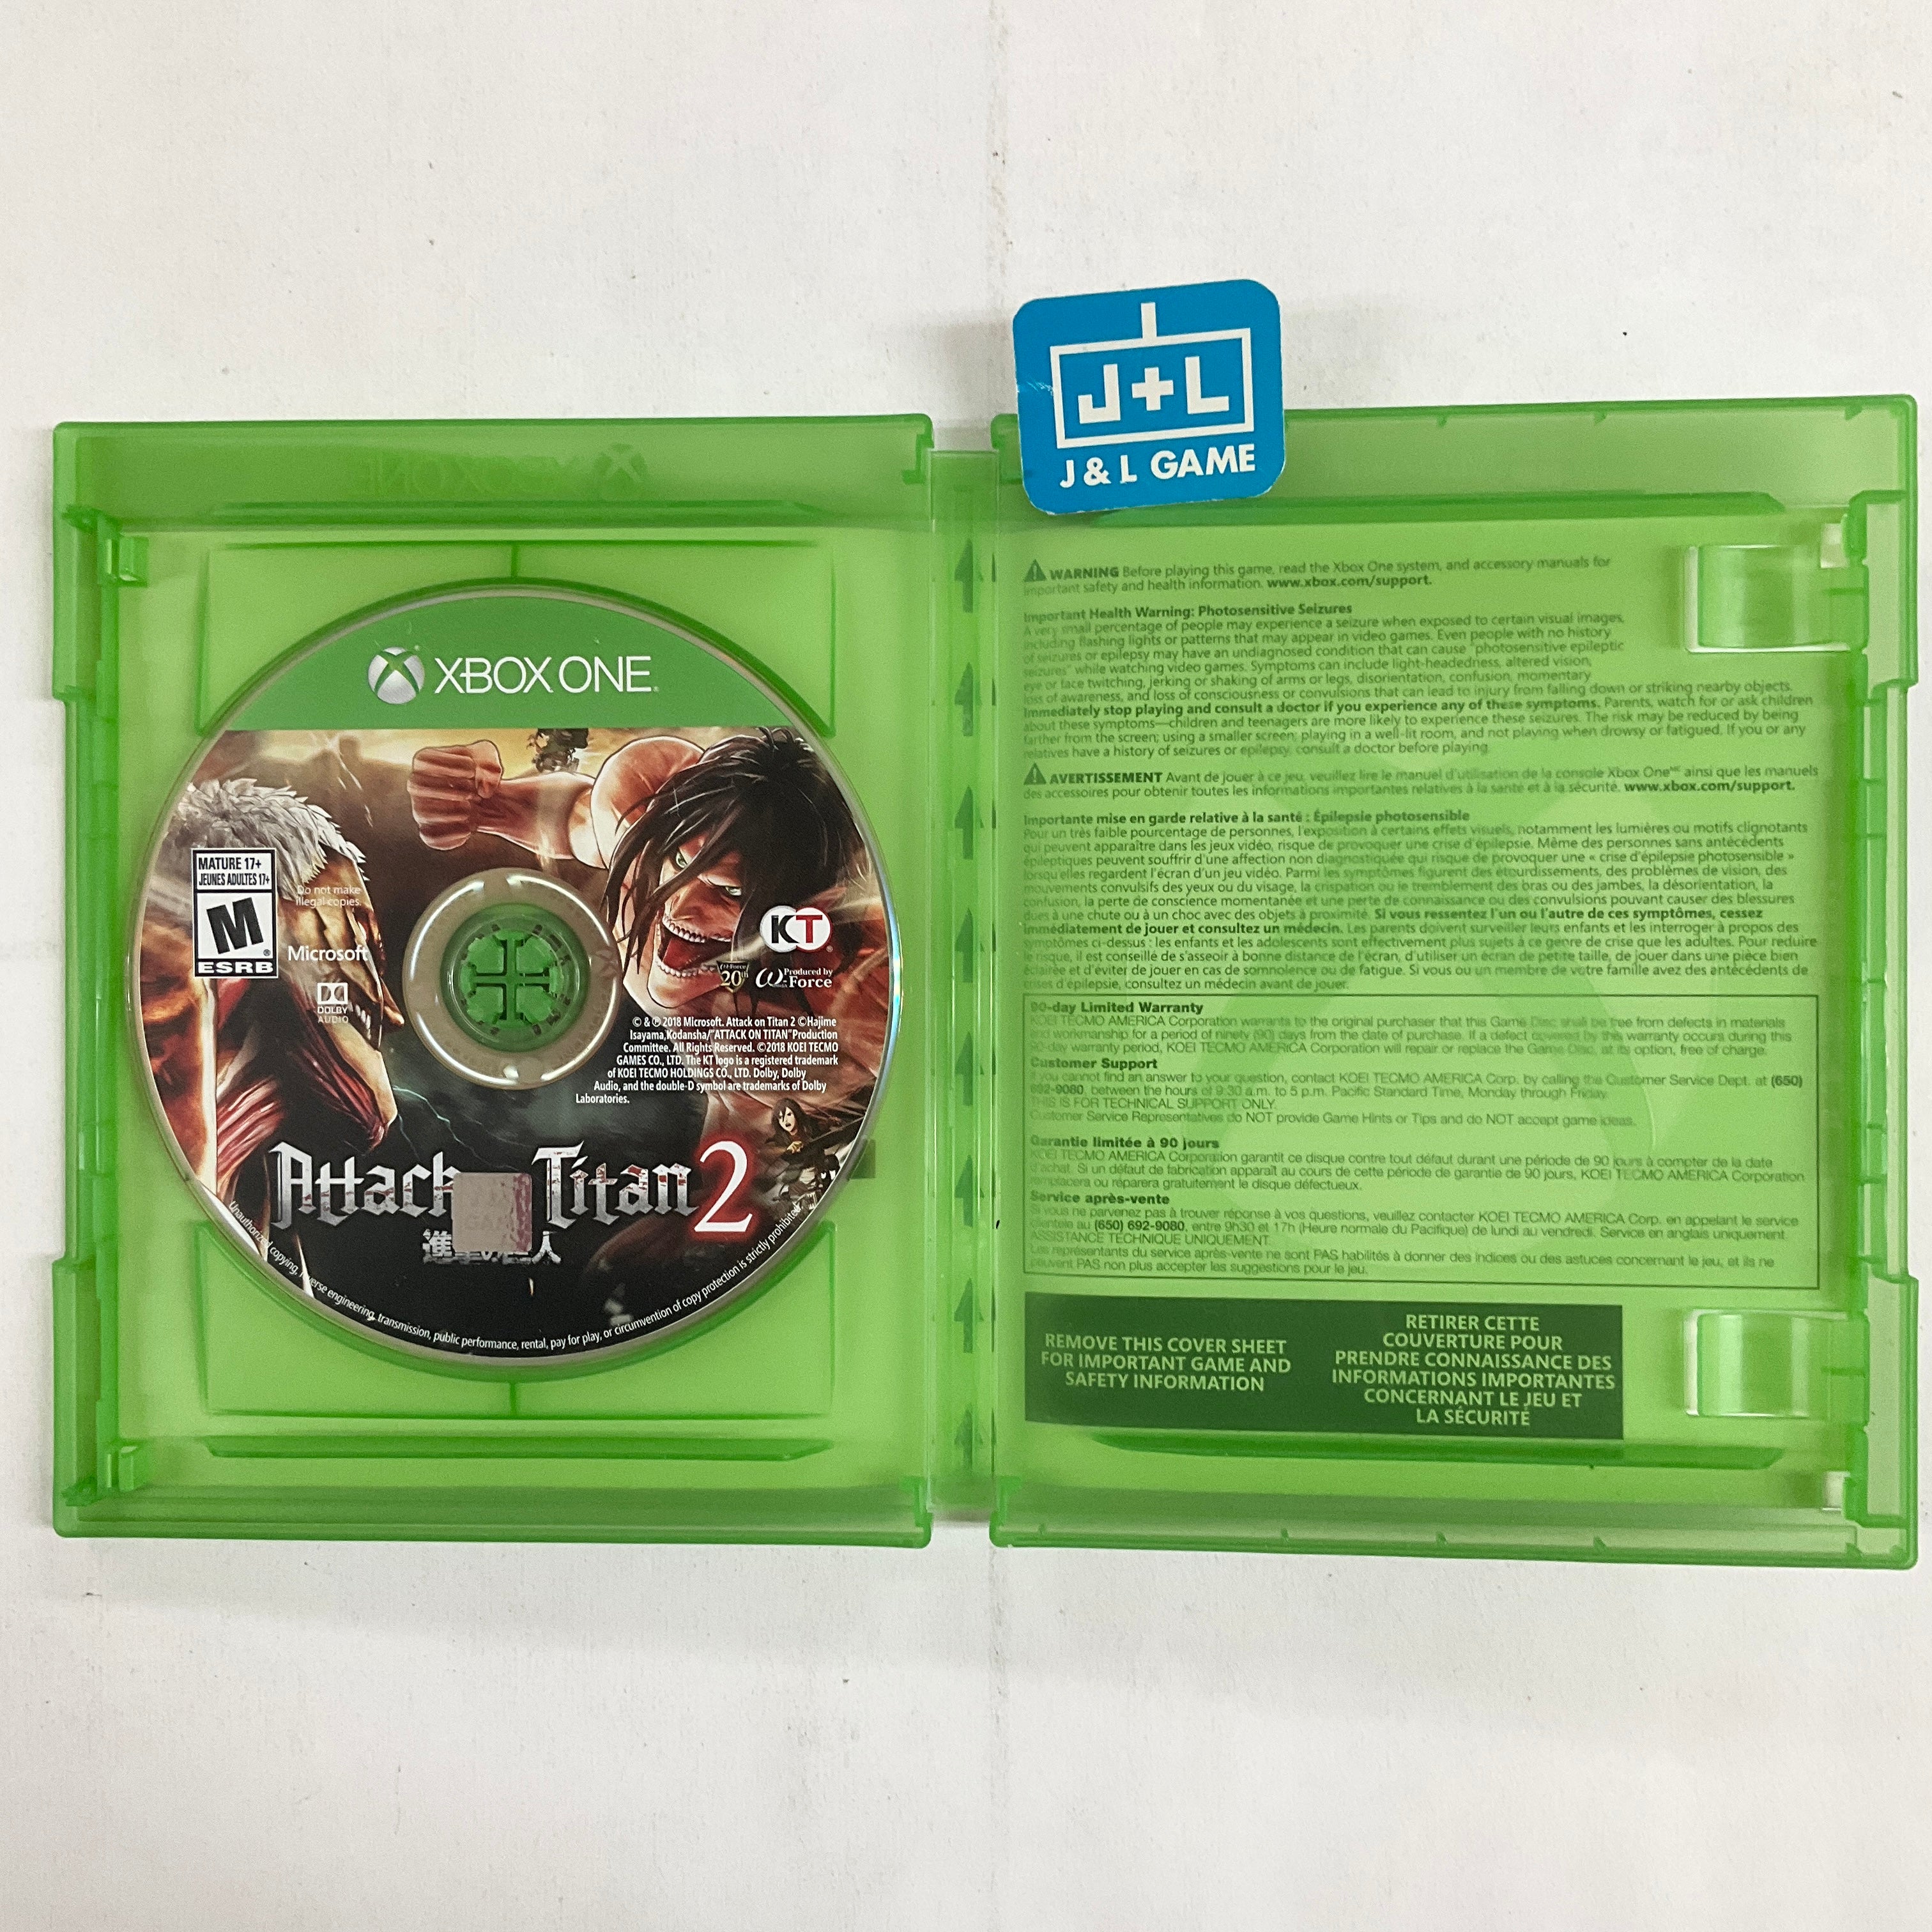 Attack on Titan 2 - (XB1) Xbox One [Pre-Owned] Video Games Koei Tecmo   